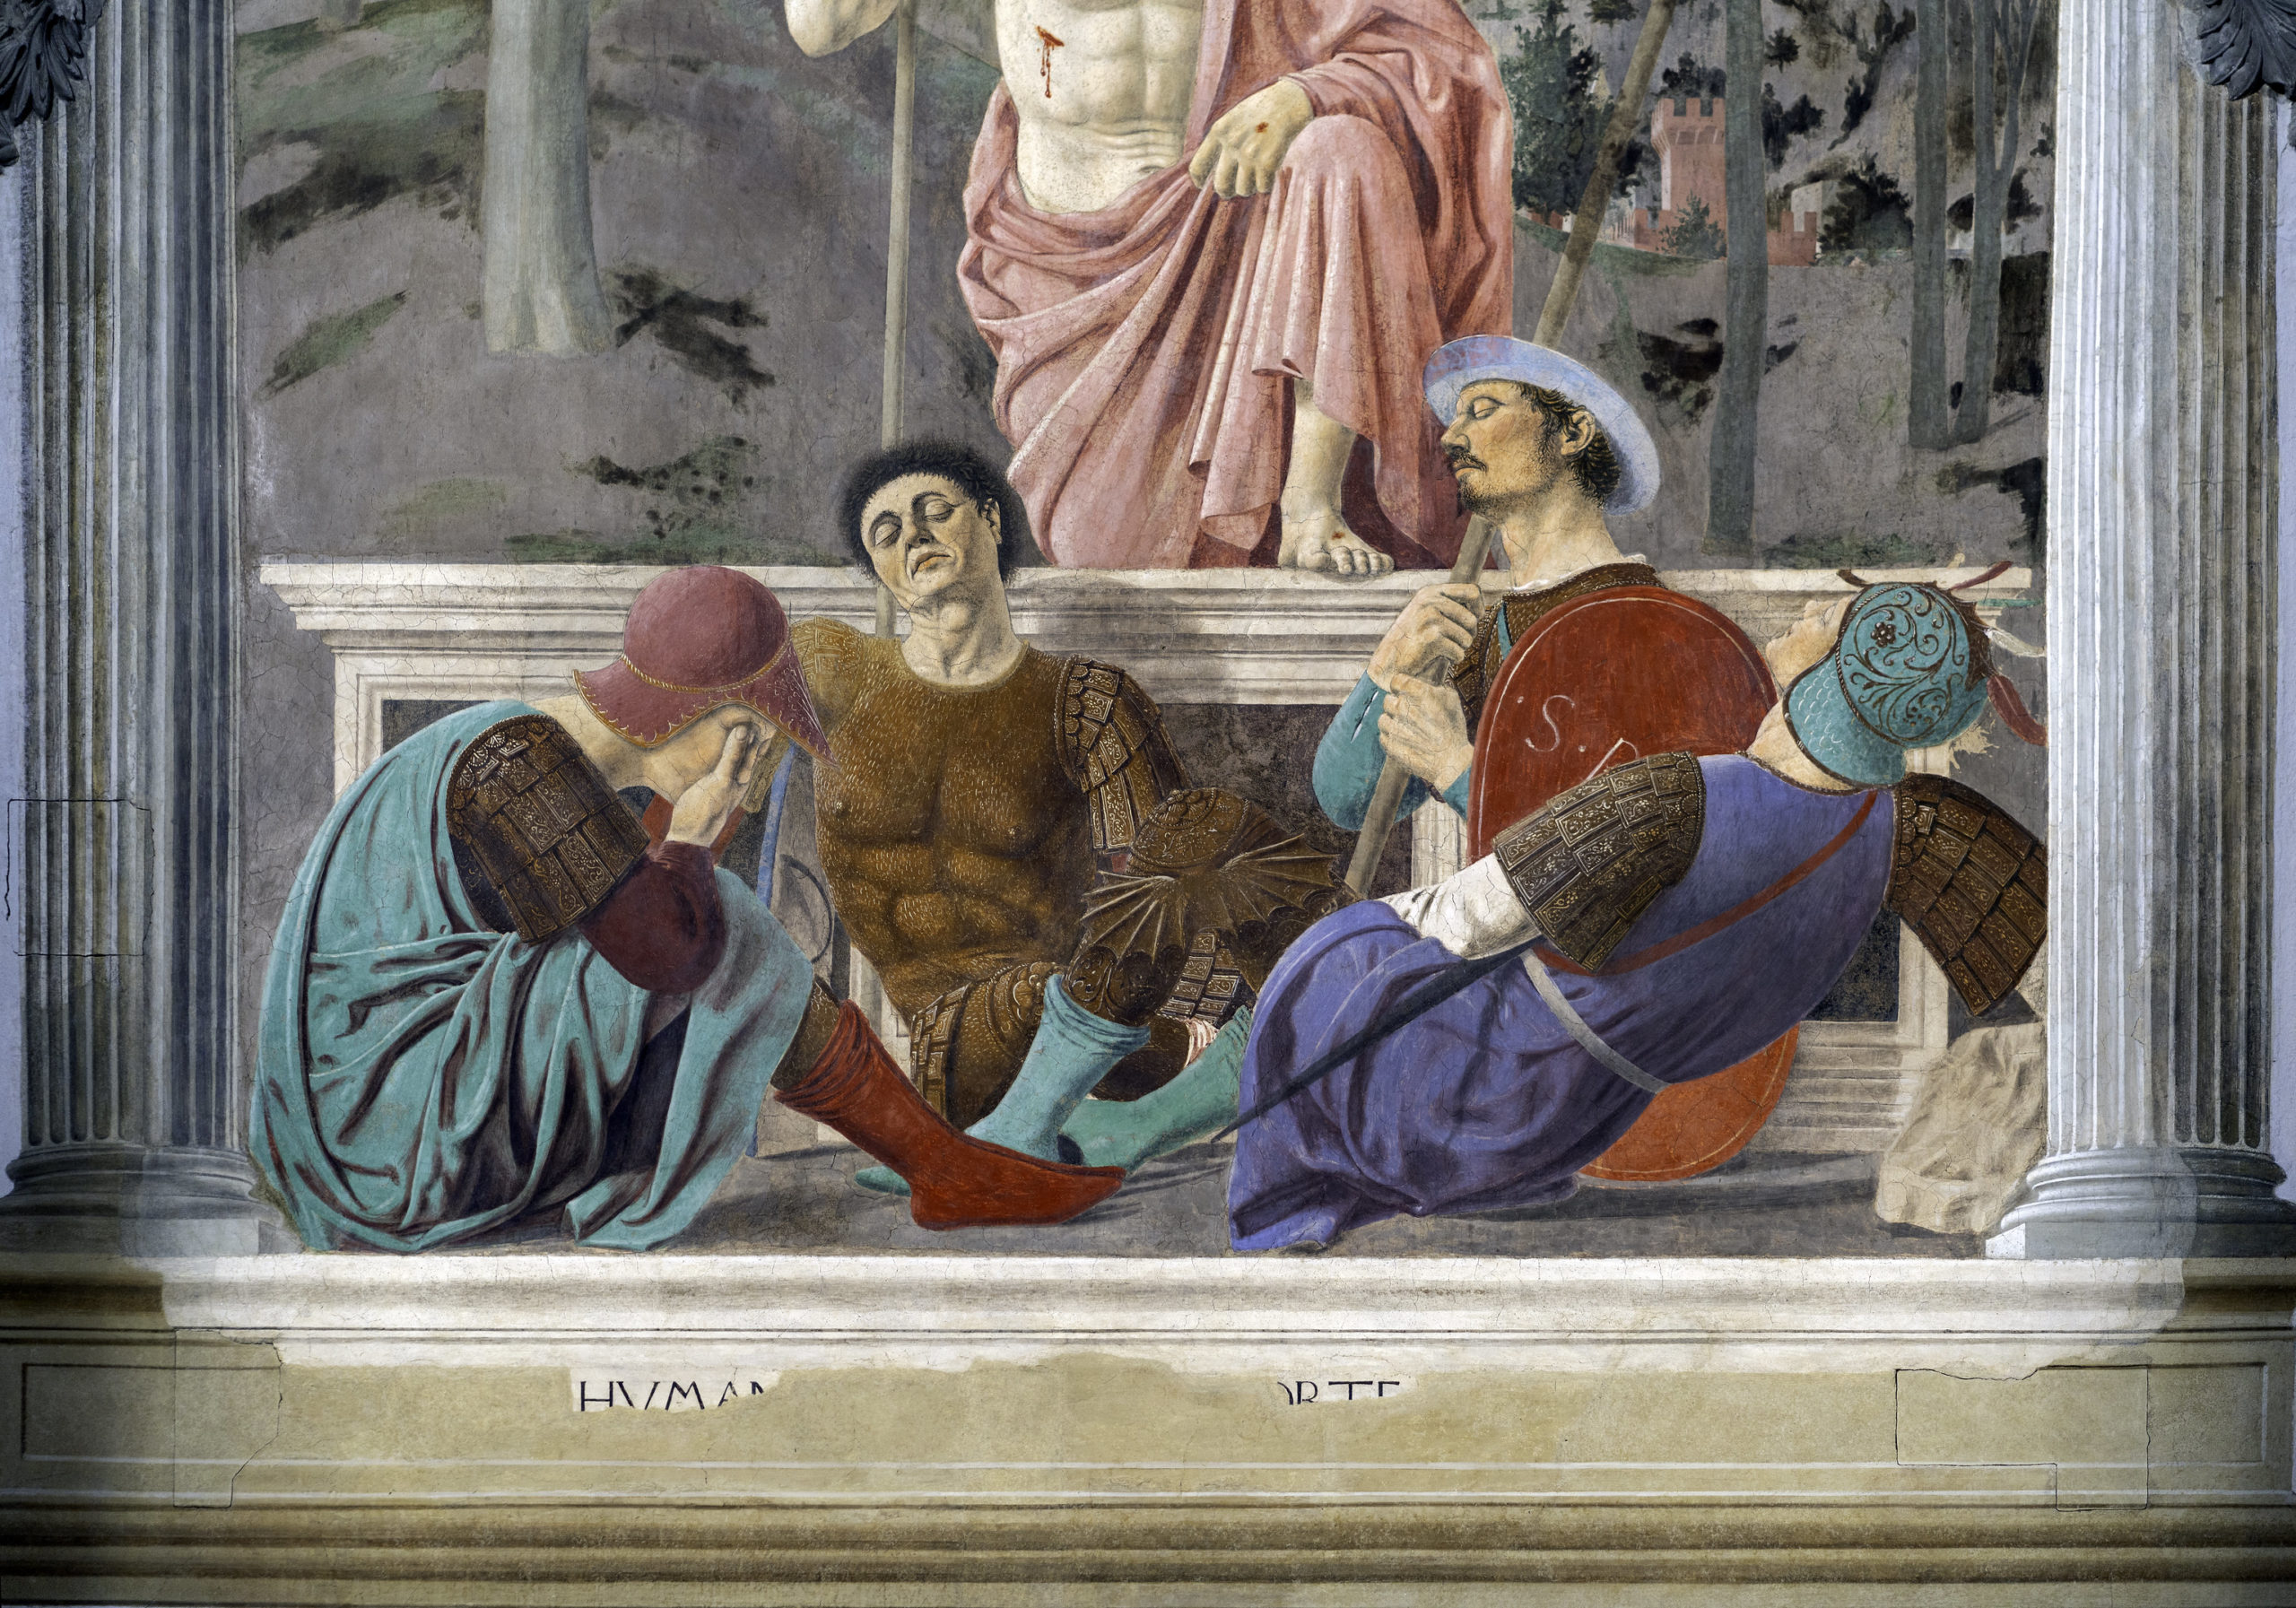 3. "The Resurrection" by Piero della Francesca - wide 3